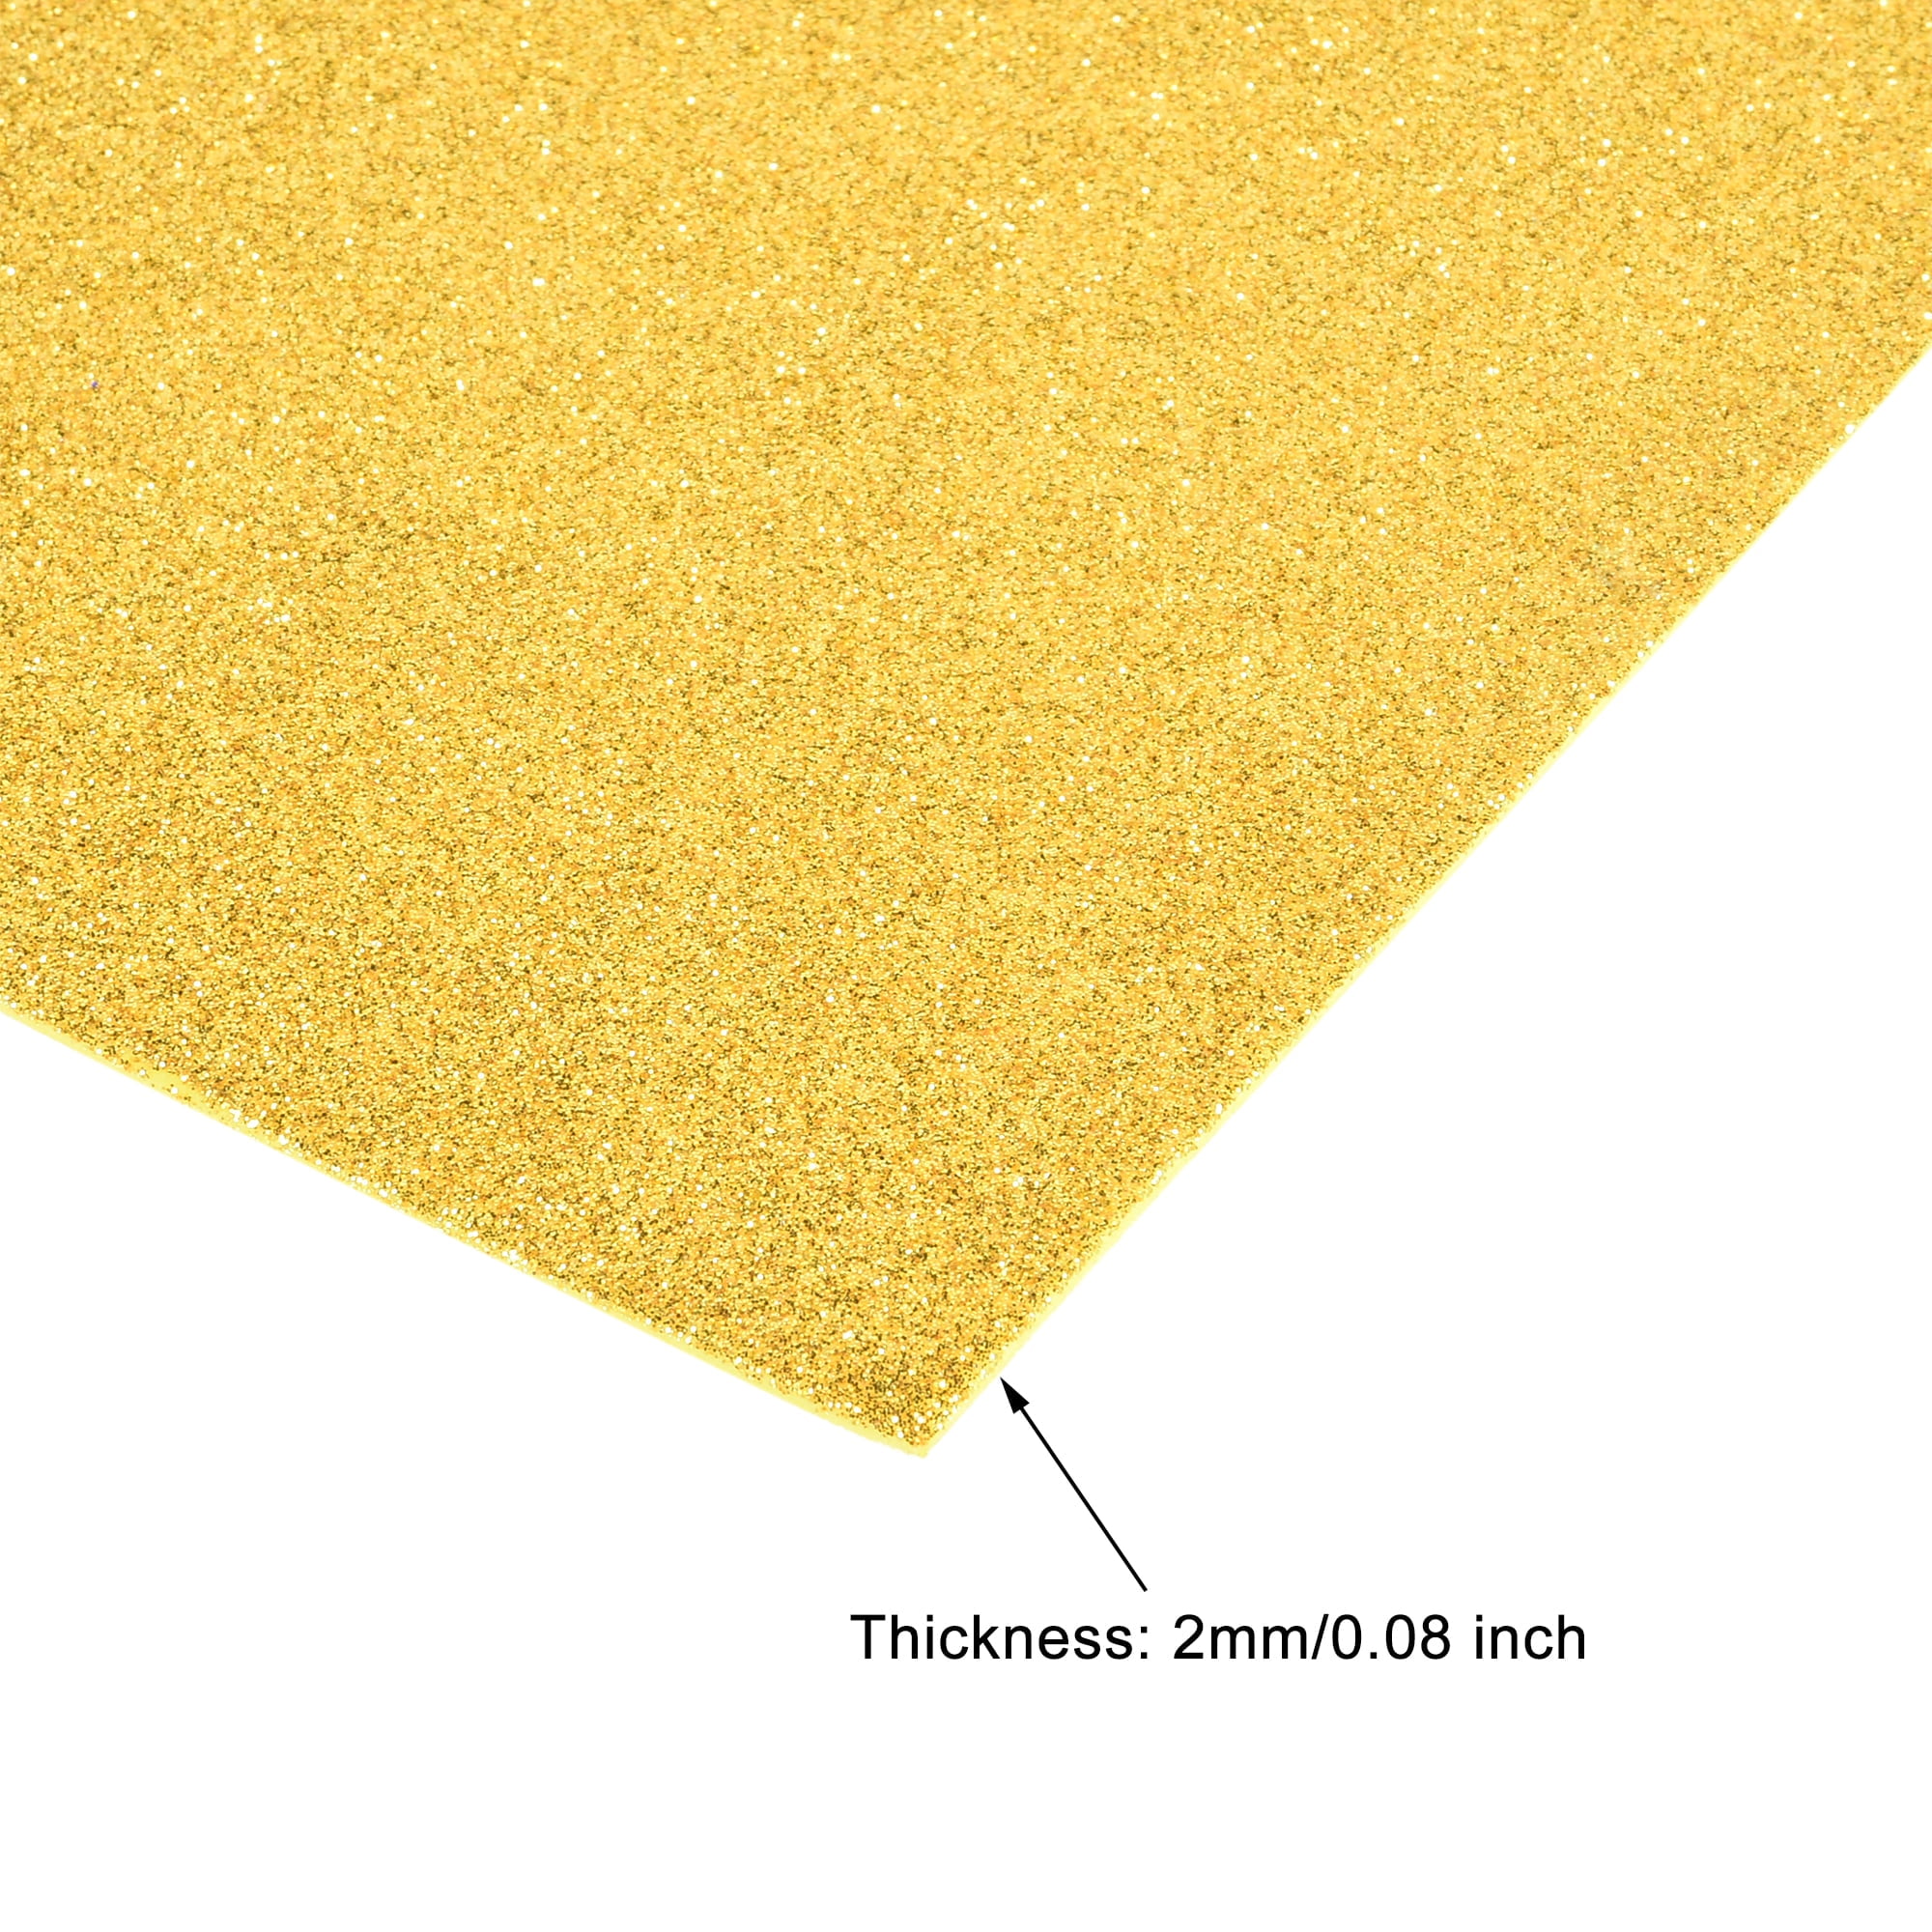 8 × 11.5 Gold Yellow Glitter Foam Sheets – Pack of 20 Glitter